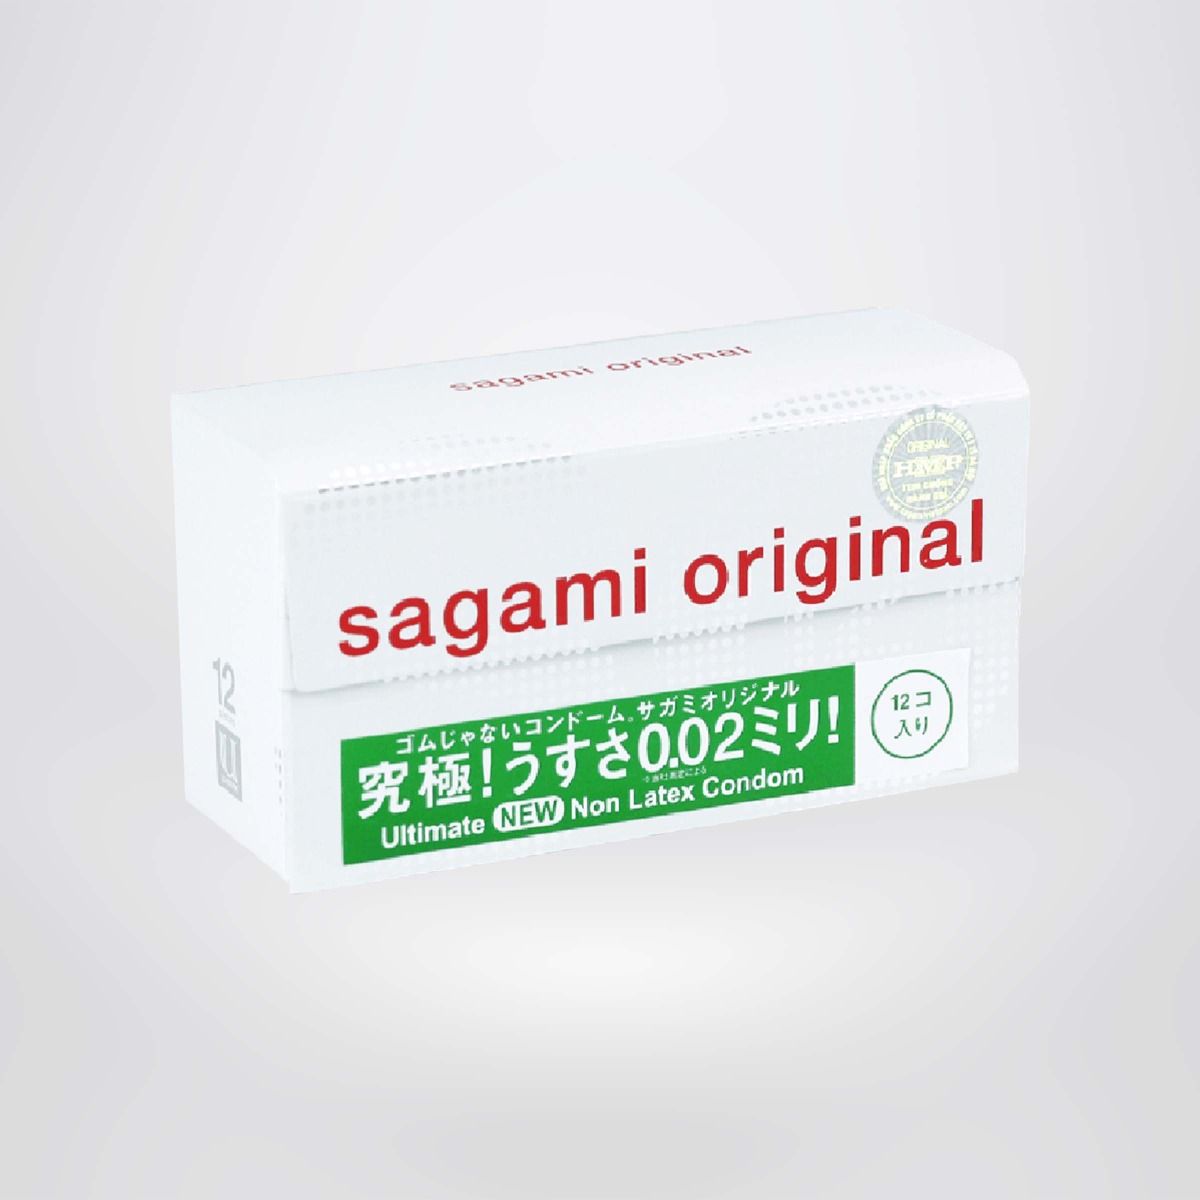 Bao cao su Sagami Original 0.02 (Hộp 12 cái) - bao cao su nam siêu mỏng size lớn siêu mỏng chỉ với 002, Non latex